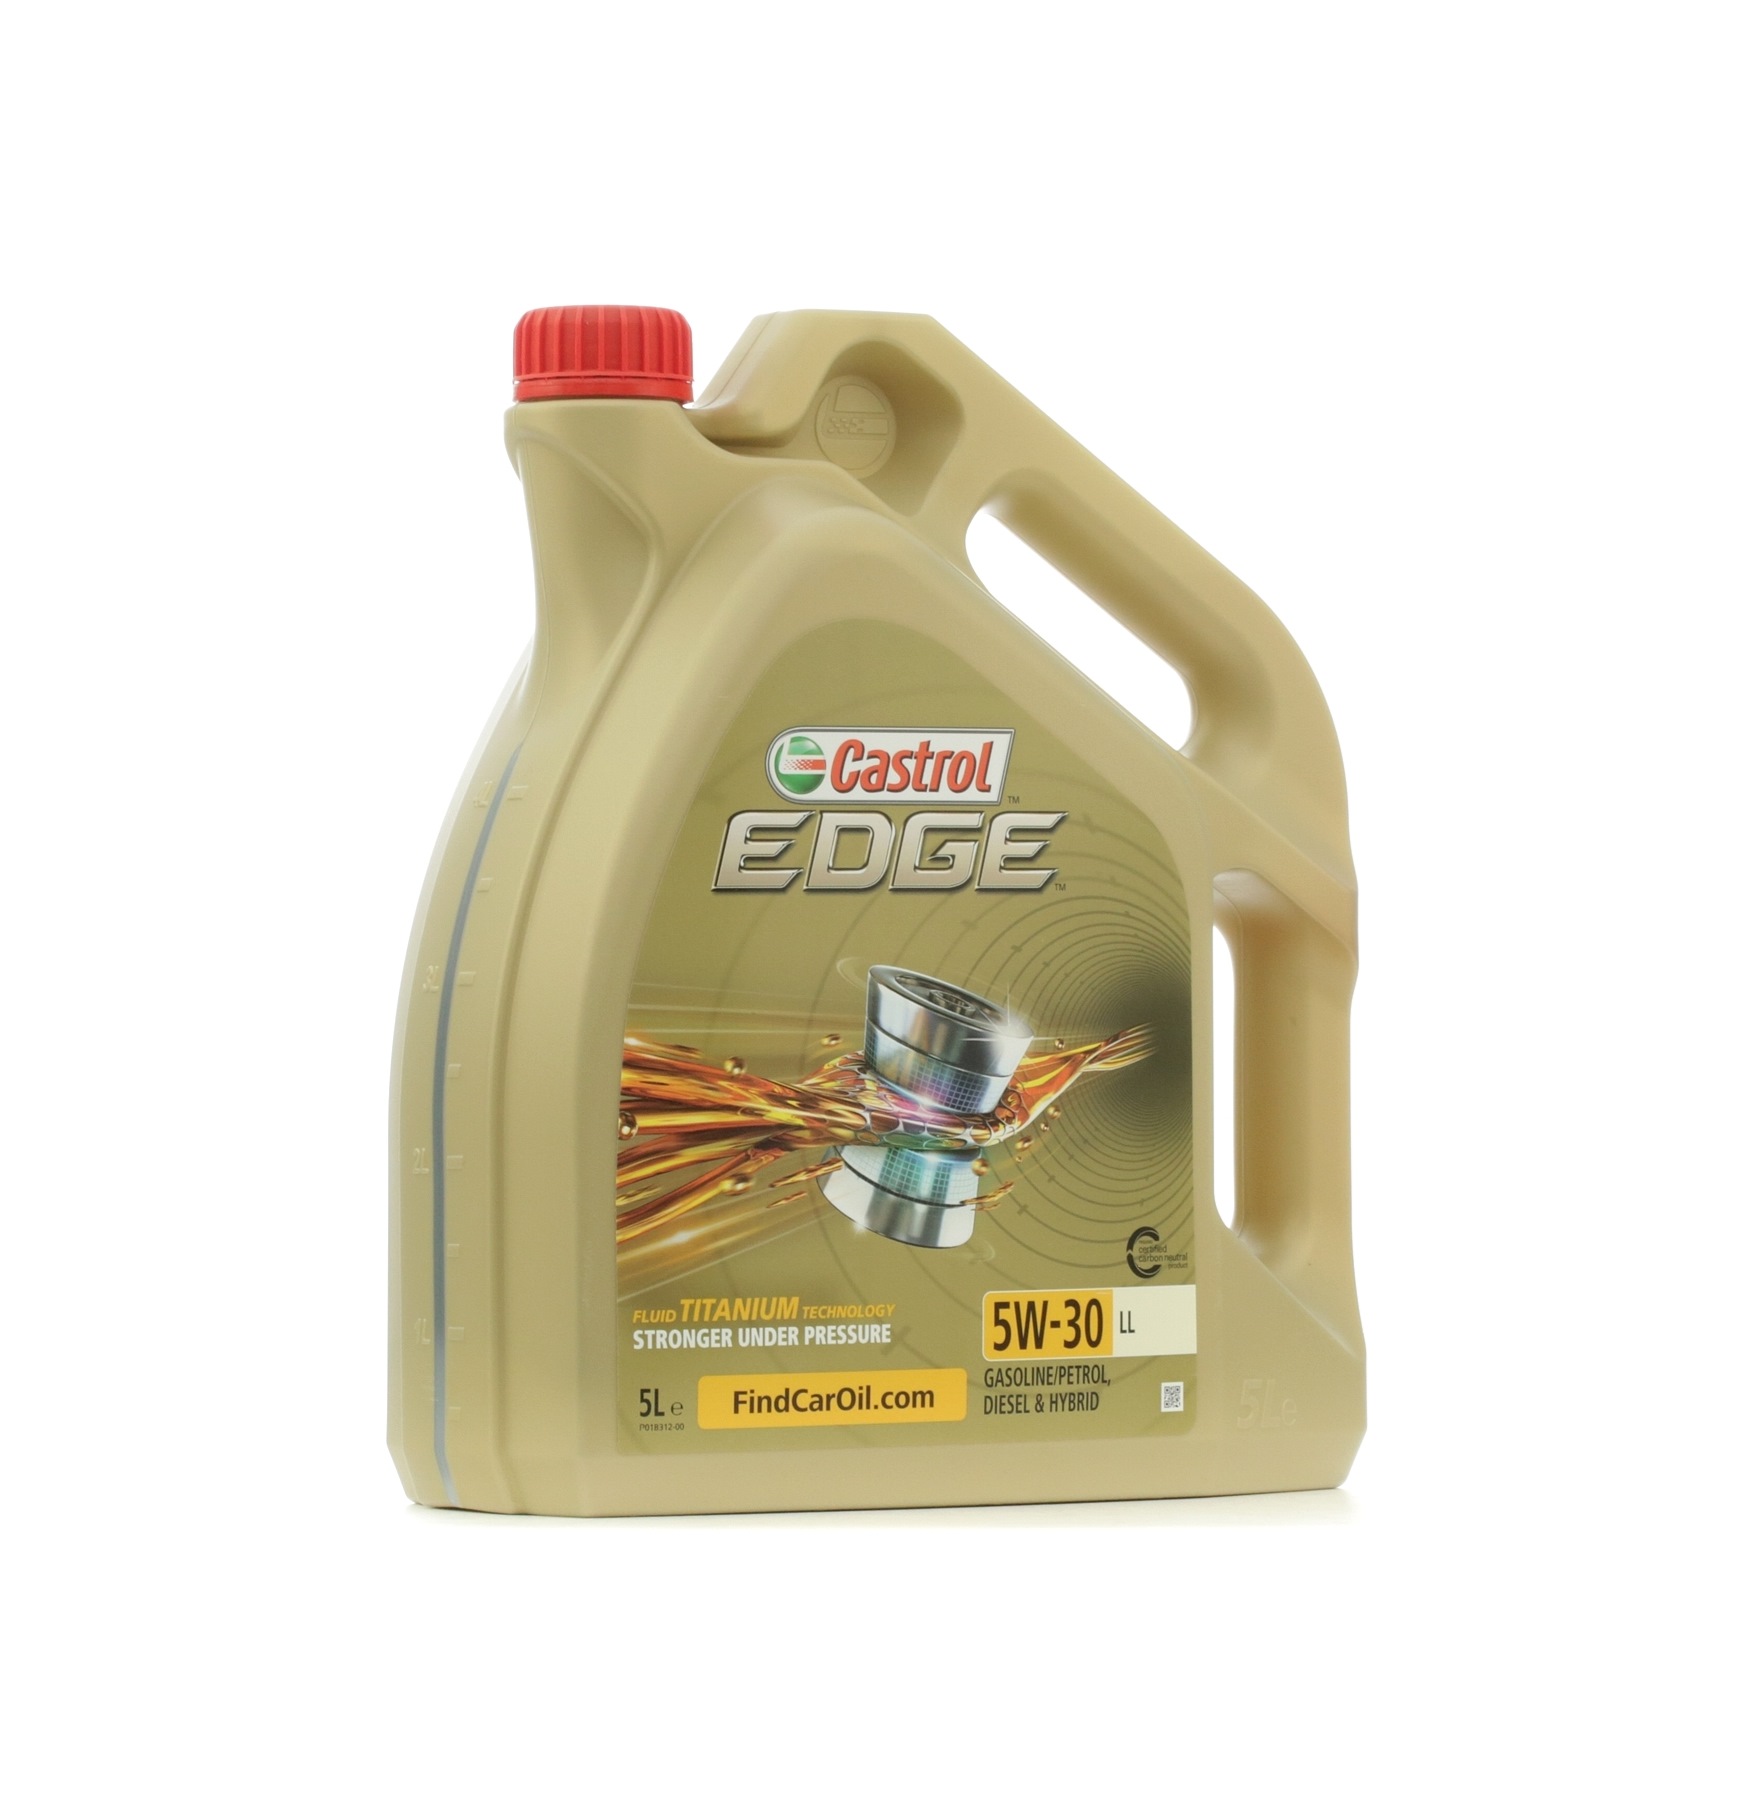 CASTROL EDGE, LL 5W-30, 5L, Synthetische olie Olie 15669B koop goedkoop